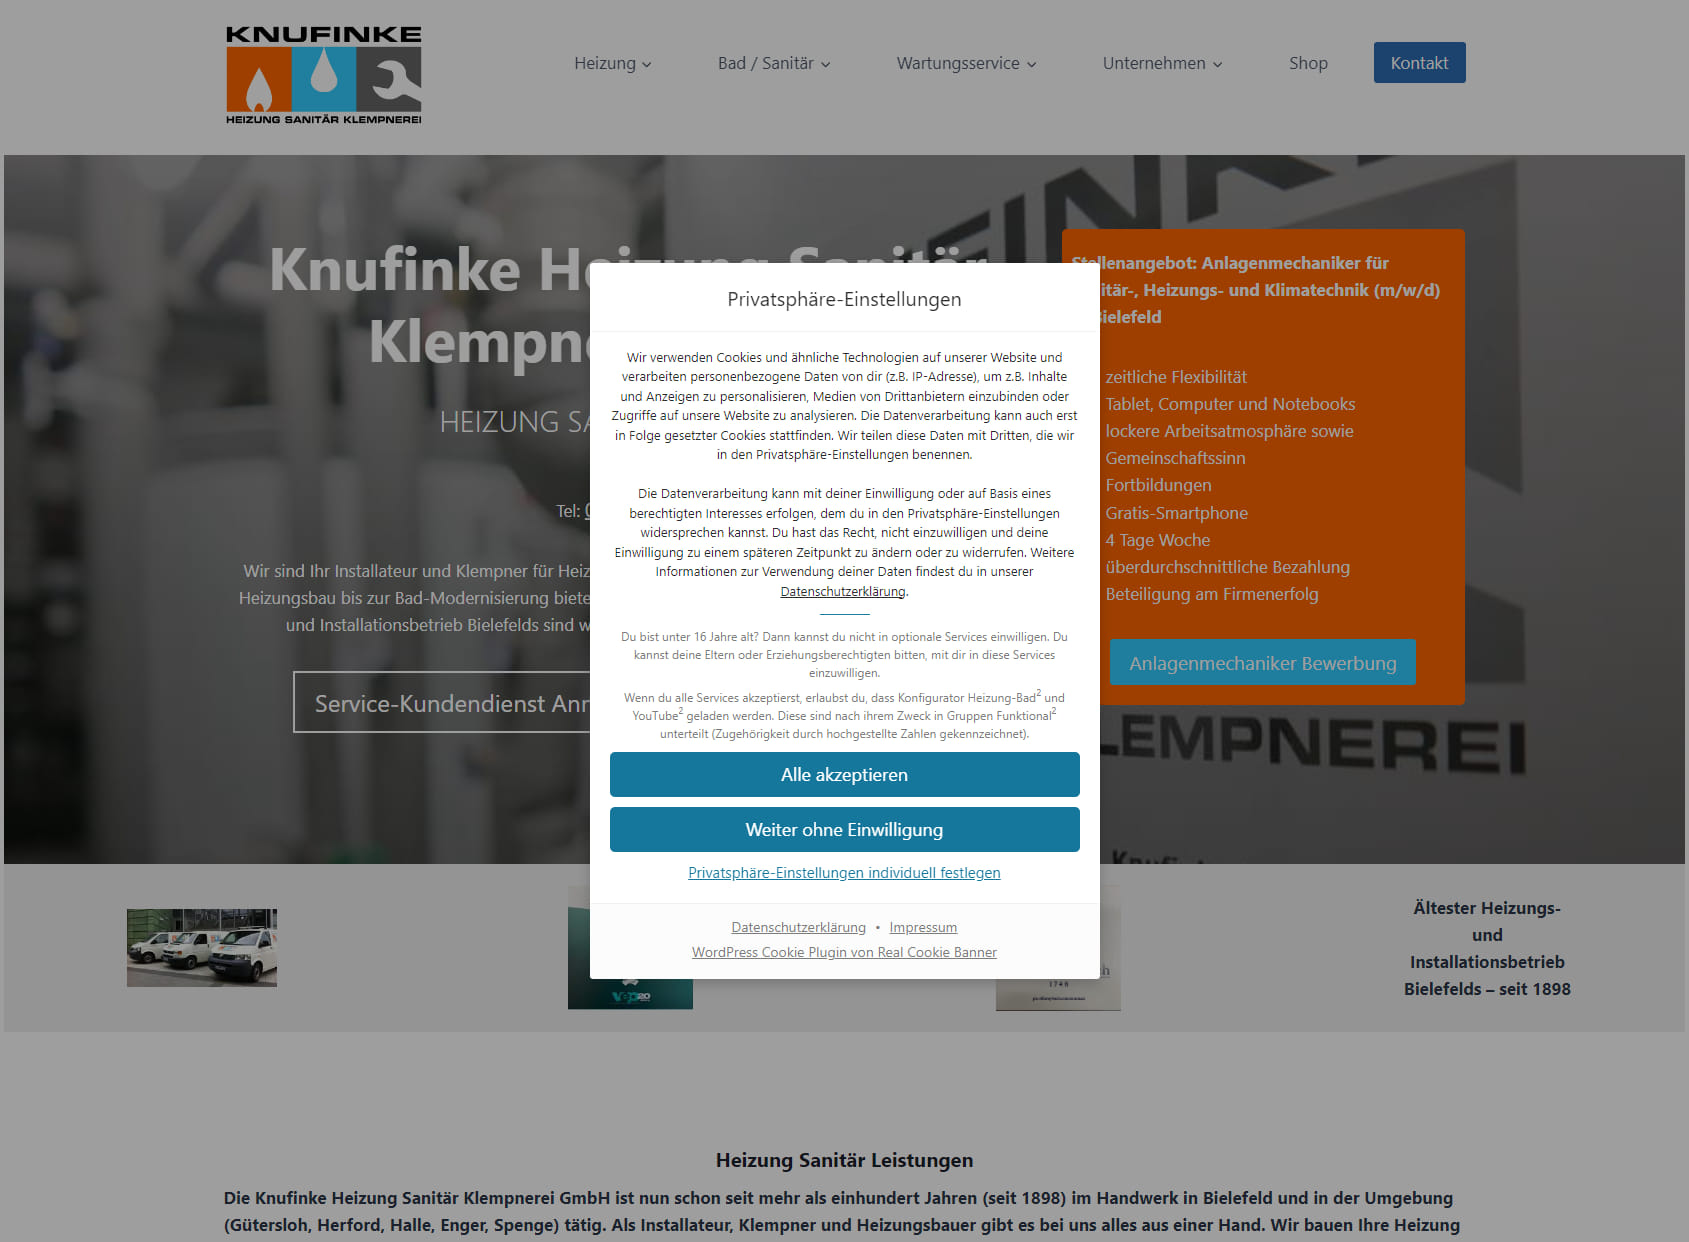 Knufinke Heating Sanitary Plumbing GmbH